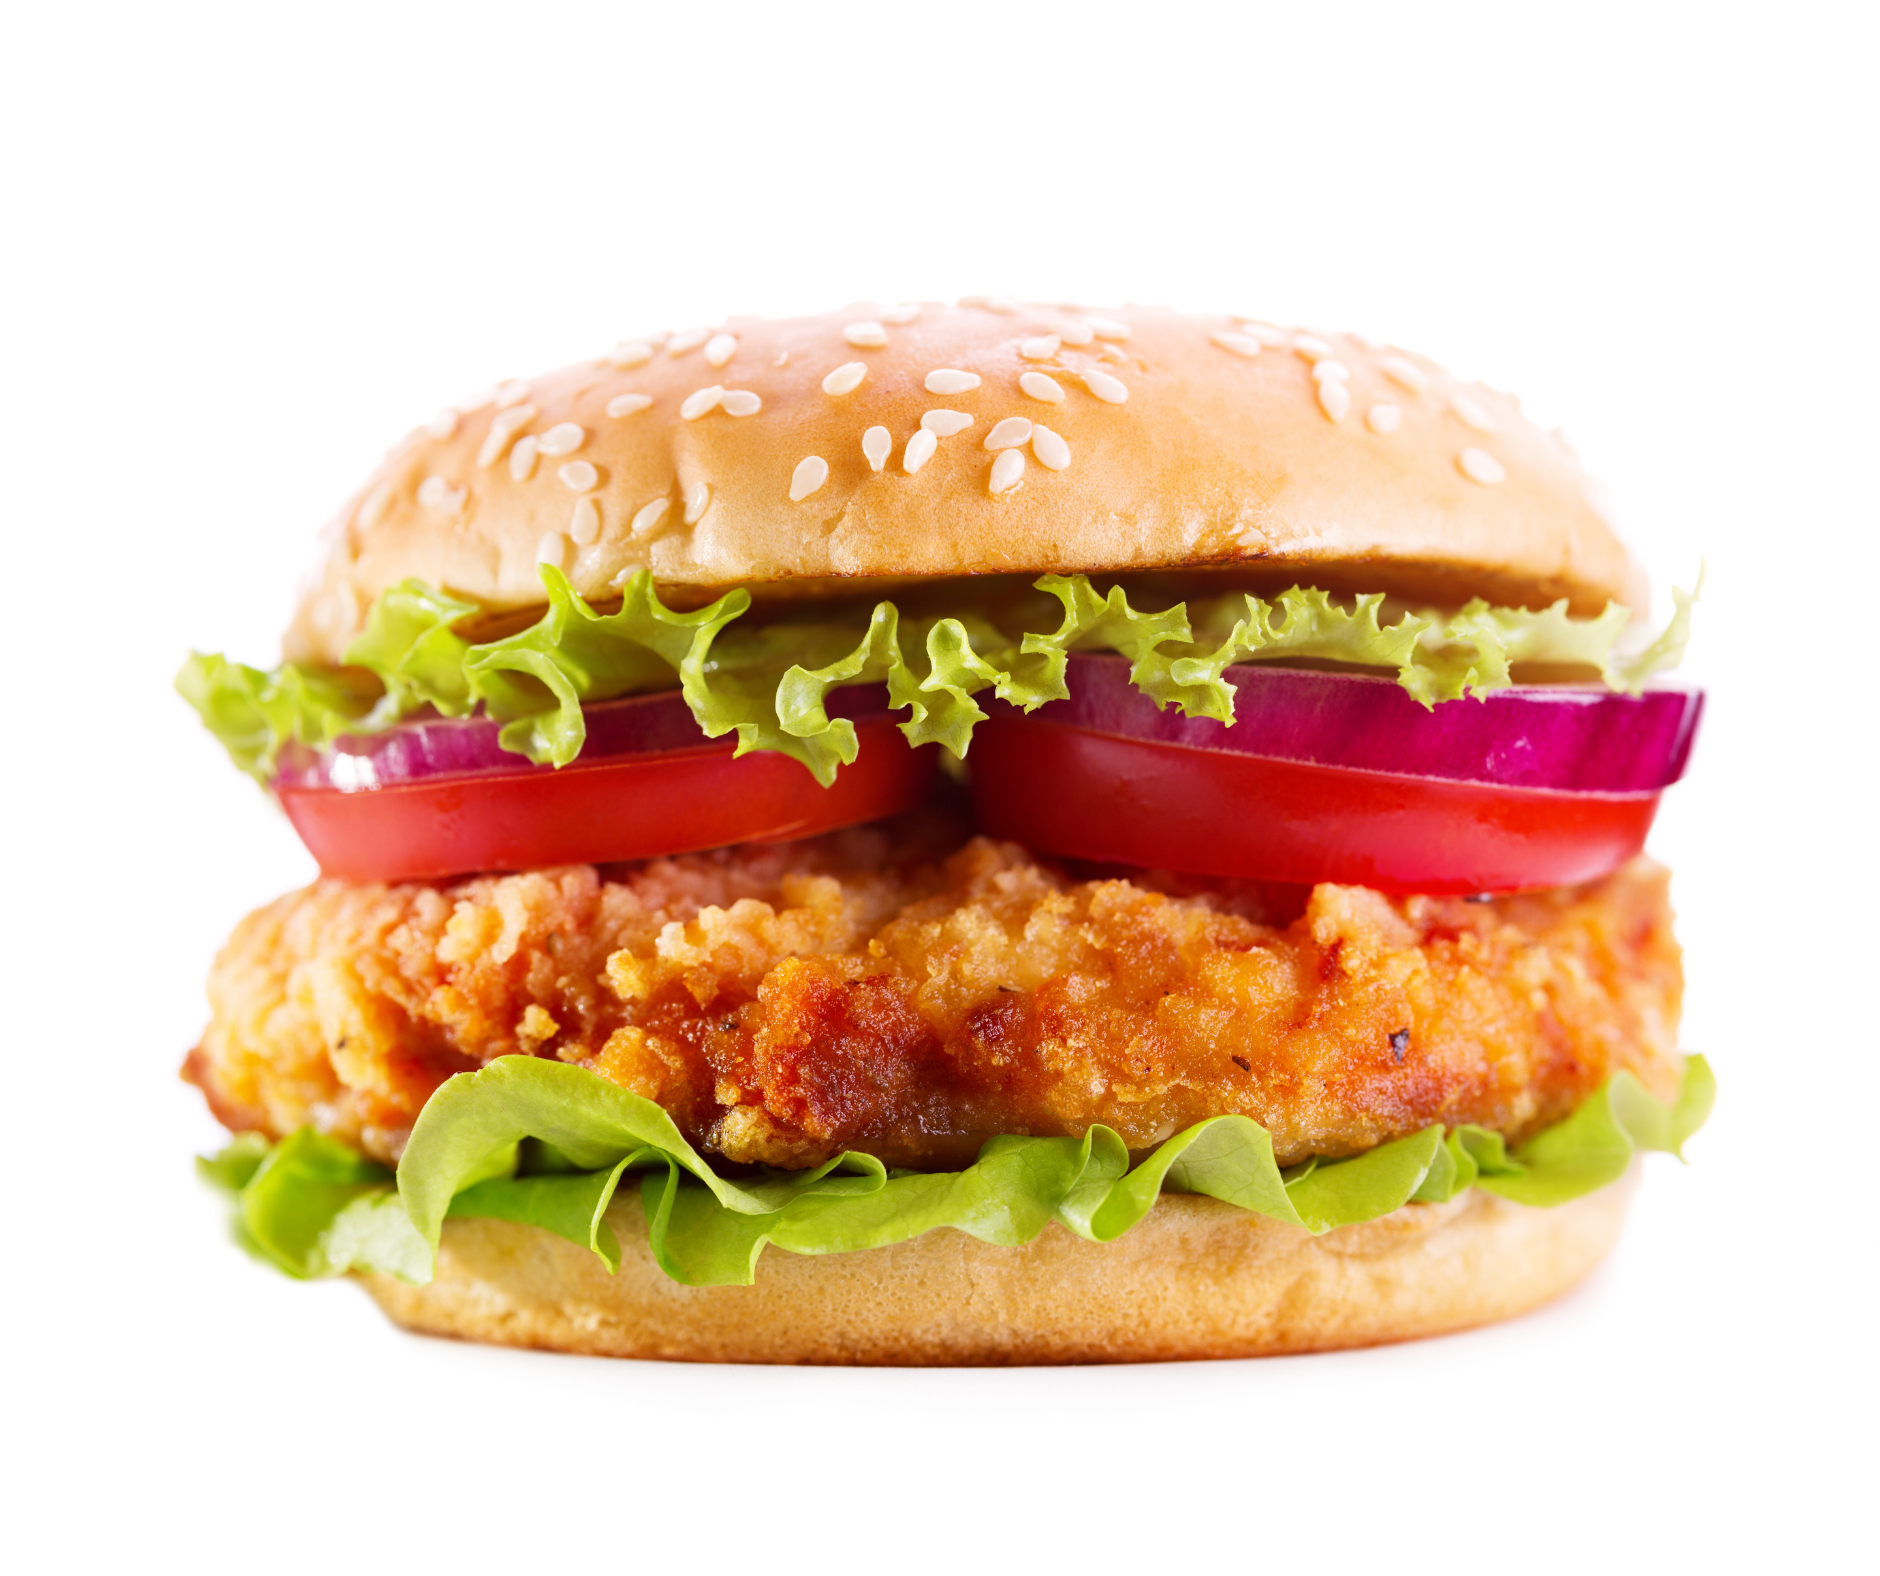 https://chicchicchicken.com/wp-content/uploads/2021/05/Burger-Chicken-Burger-with-Backgorund.png